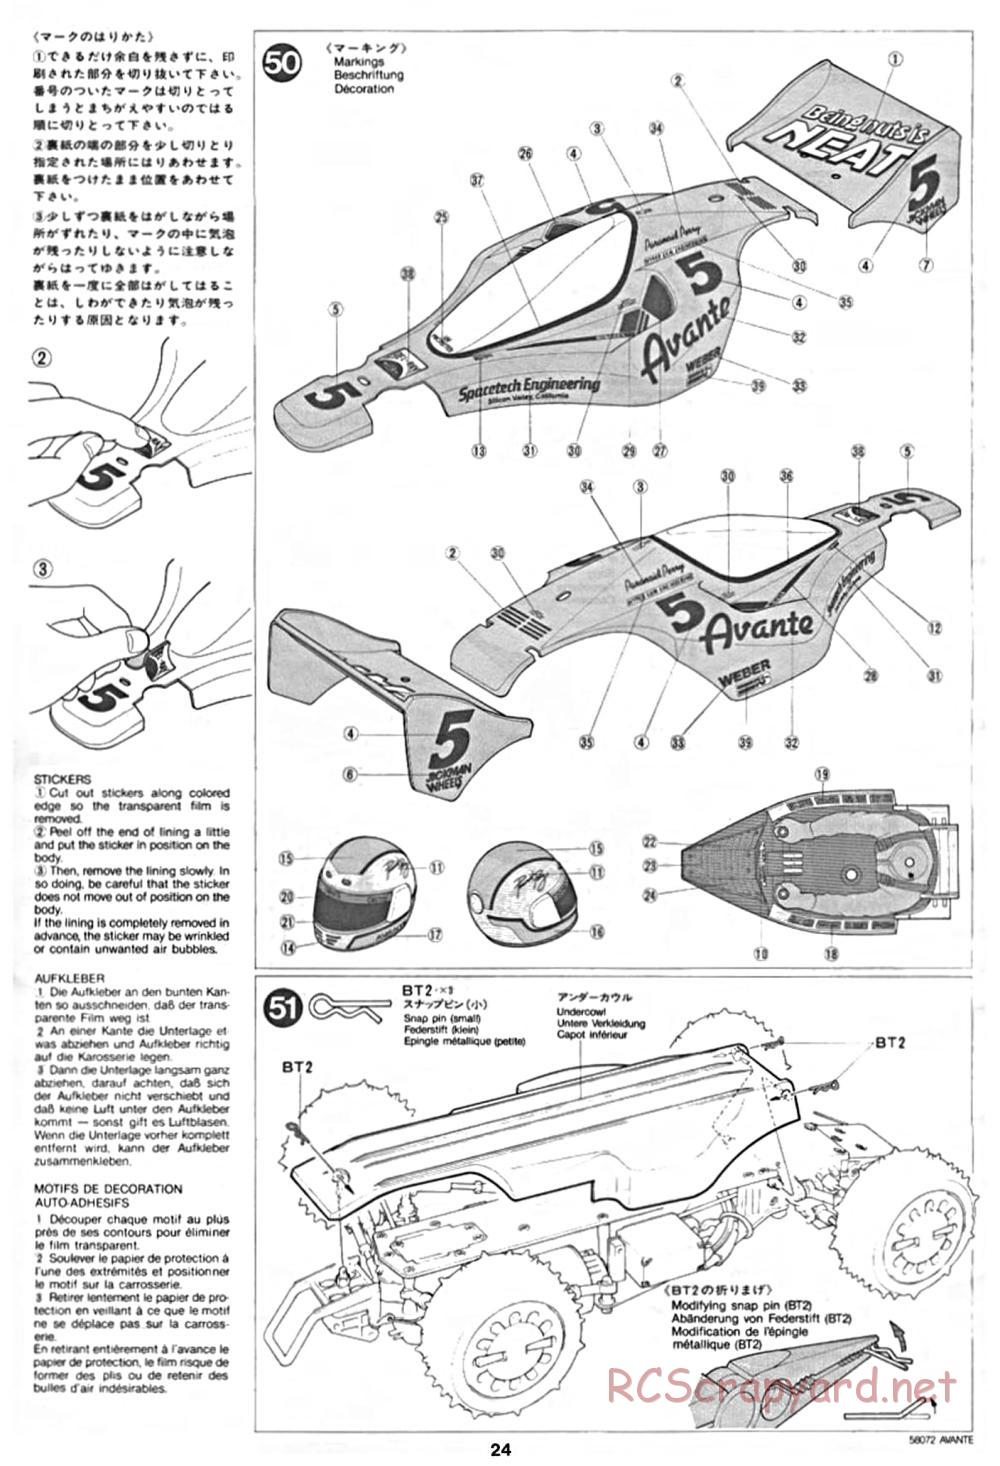 Tamiya - Avante - 58072 - Manual - Page 24